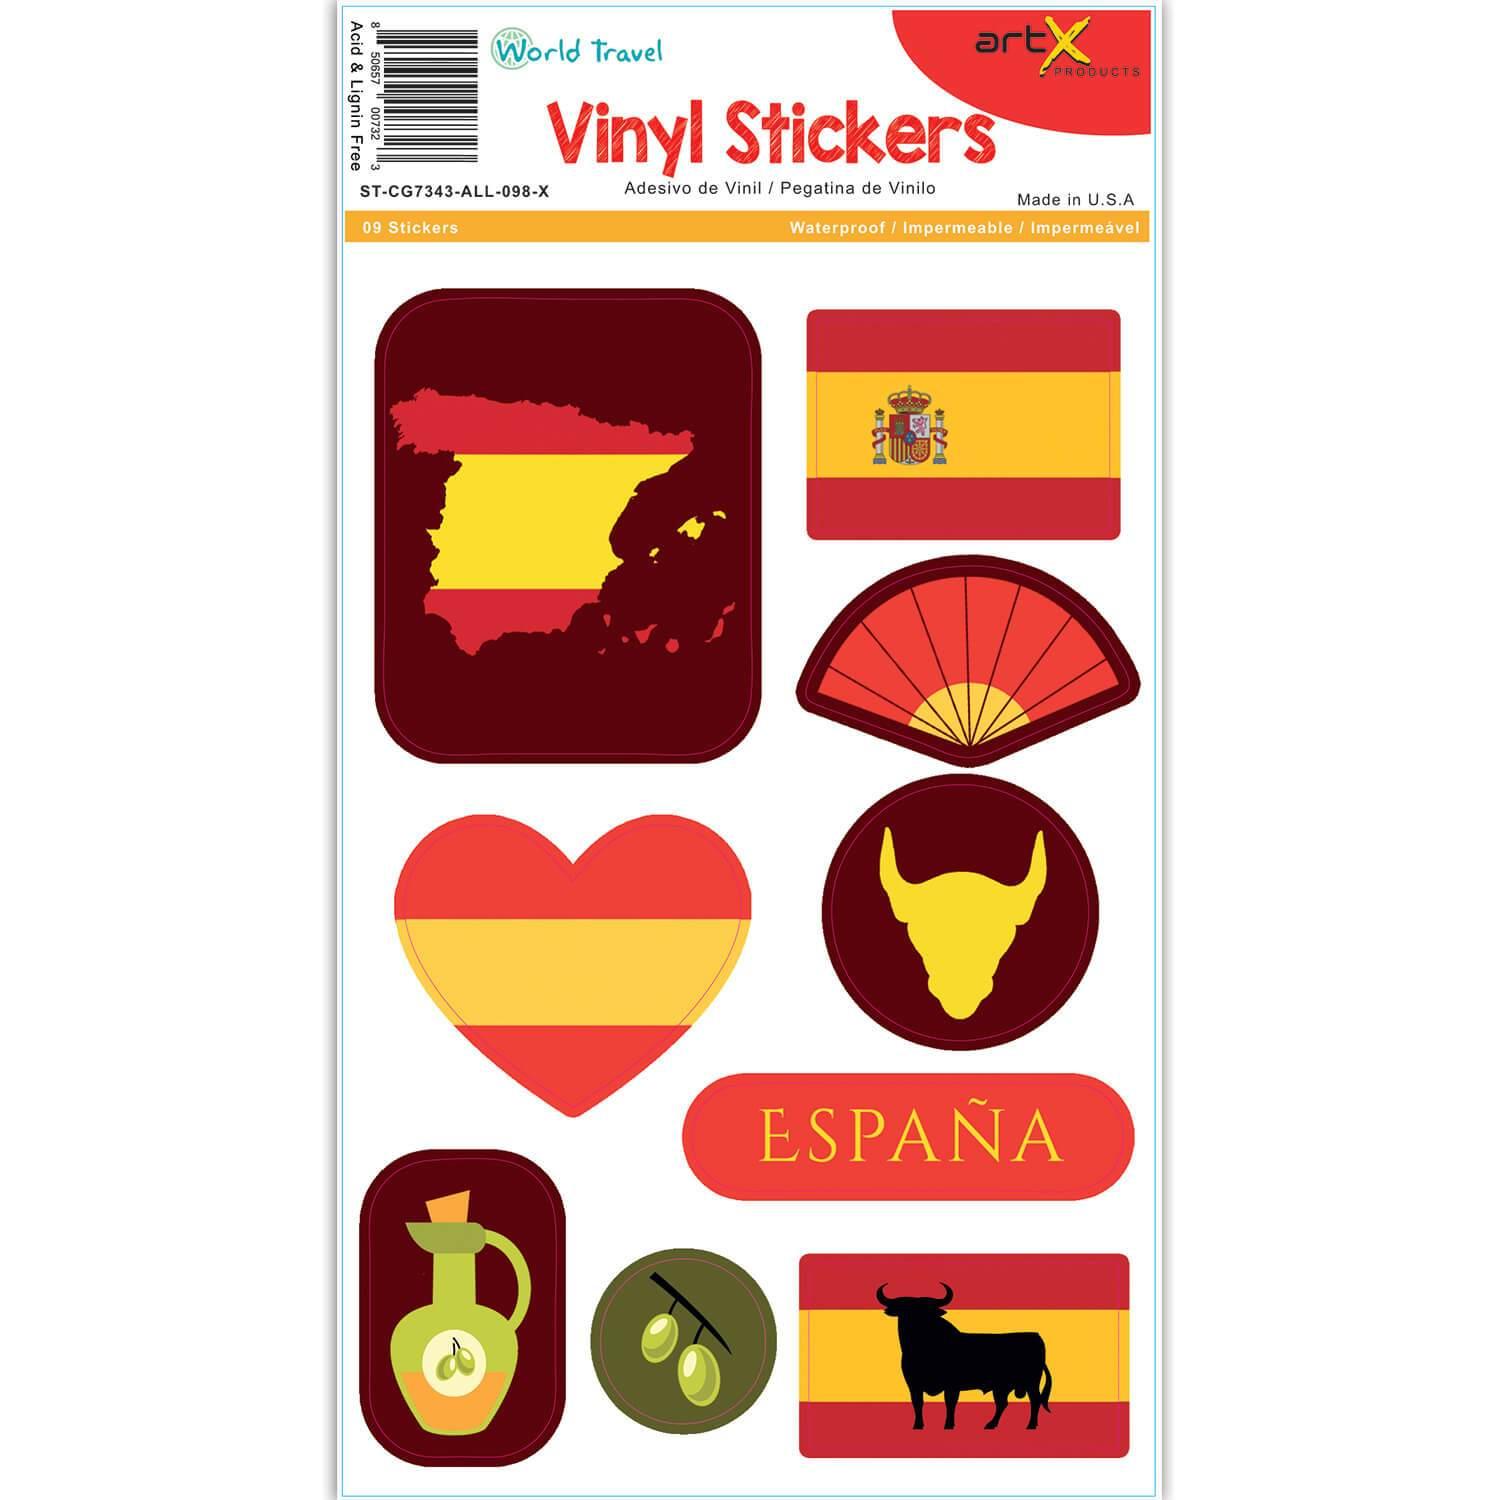 Spain Travel Scrapbook Stickers